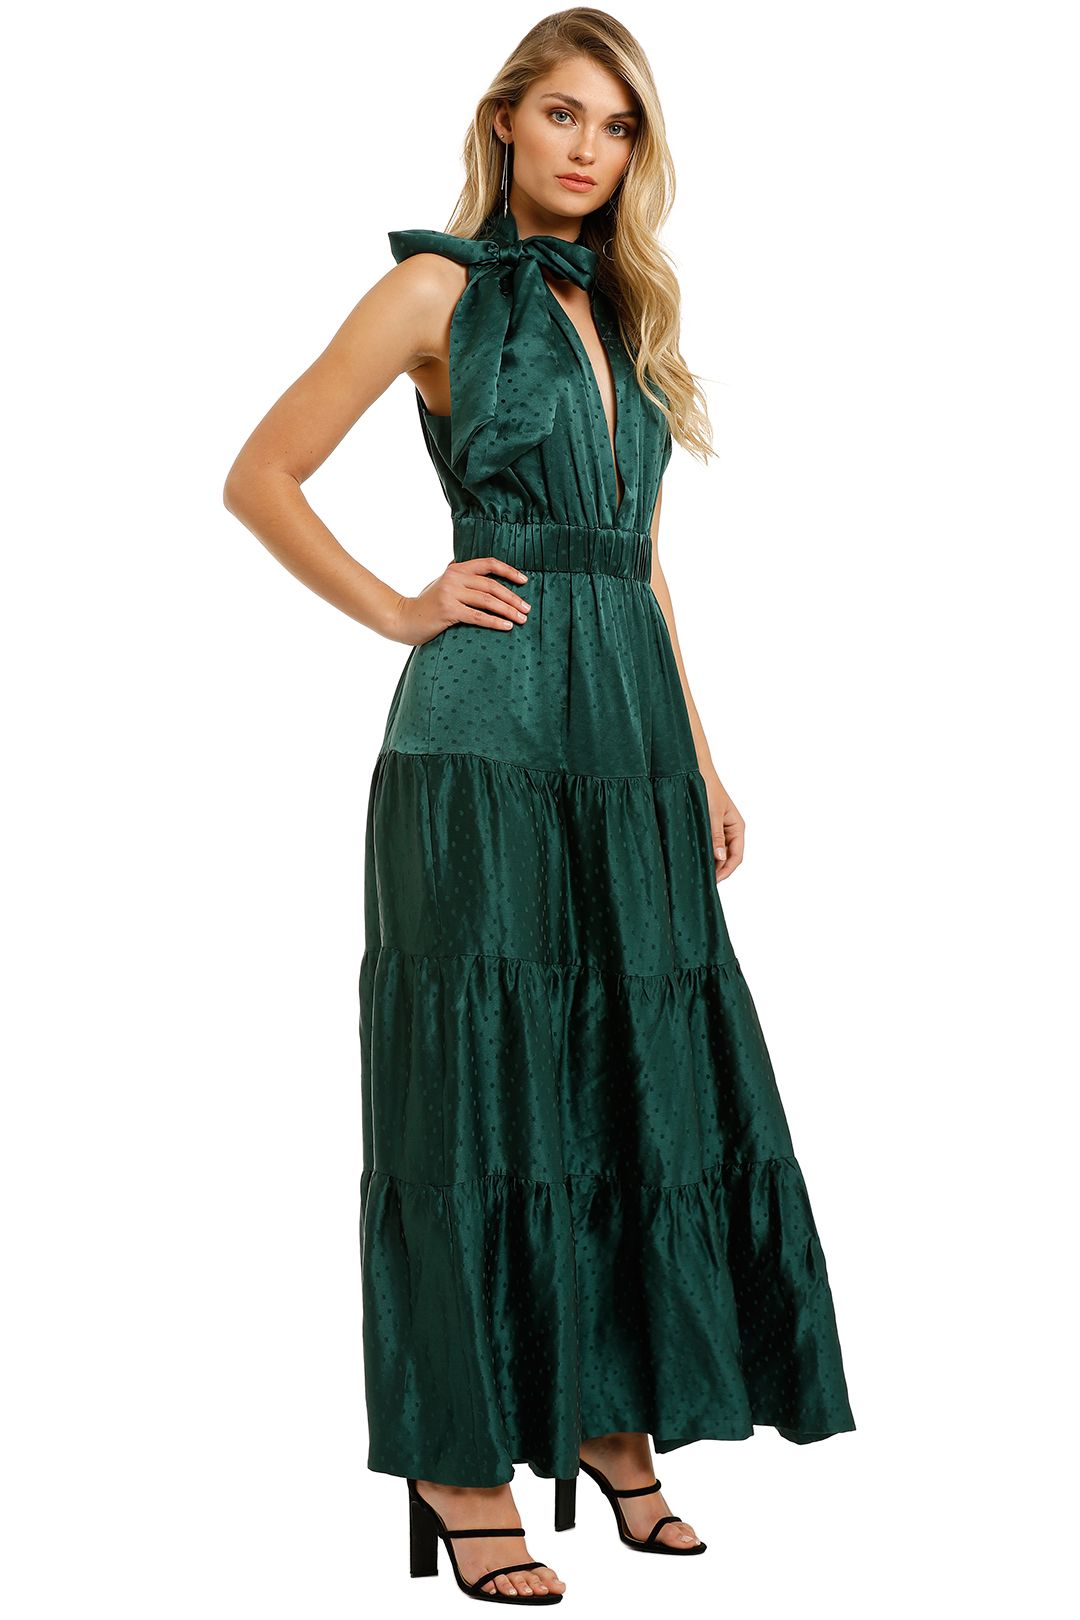 KITX-Essence-Spot-Dress-Emerald-Side